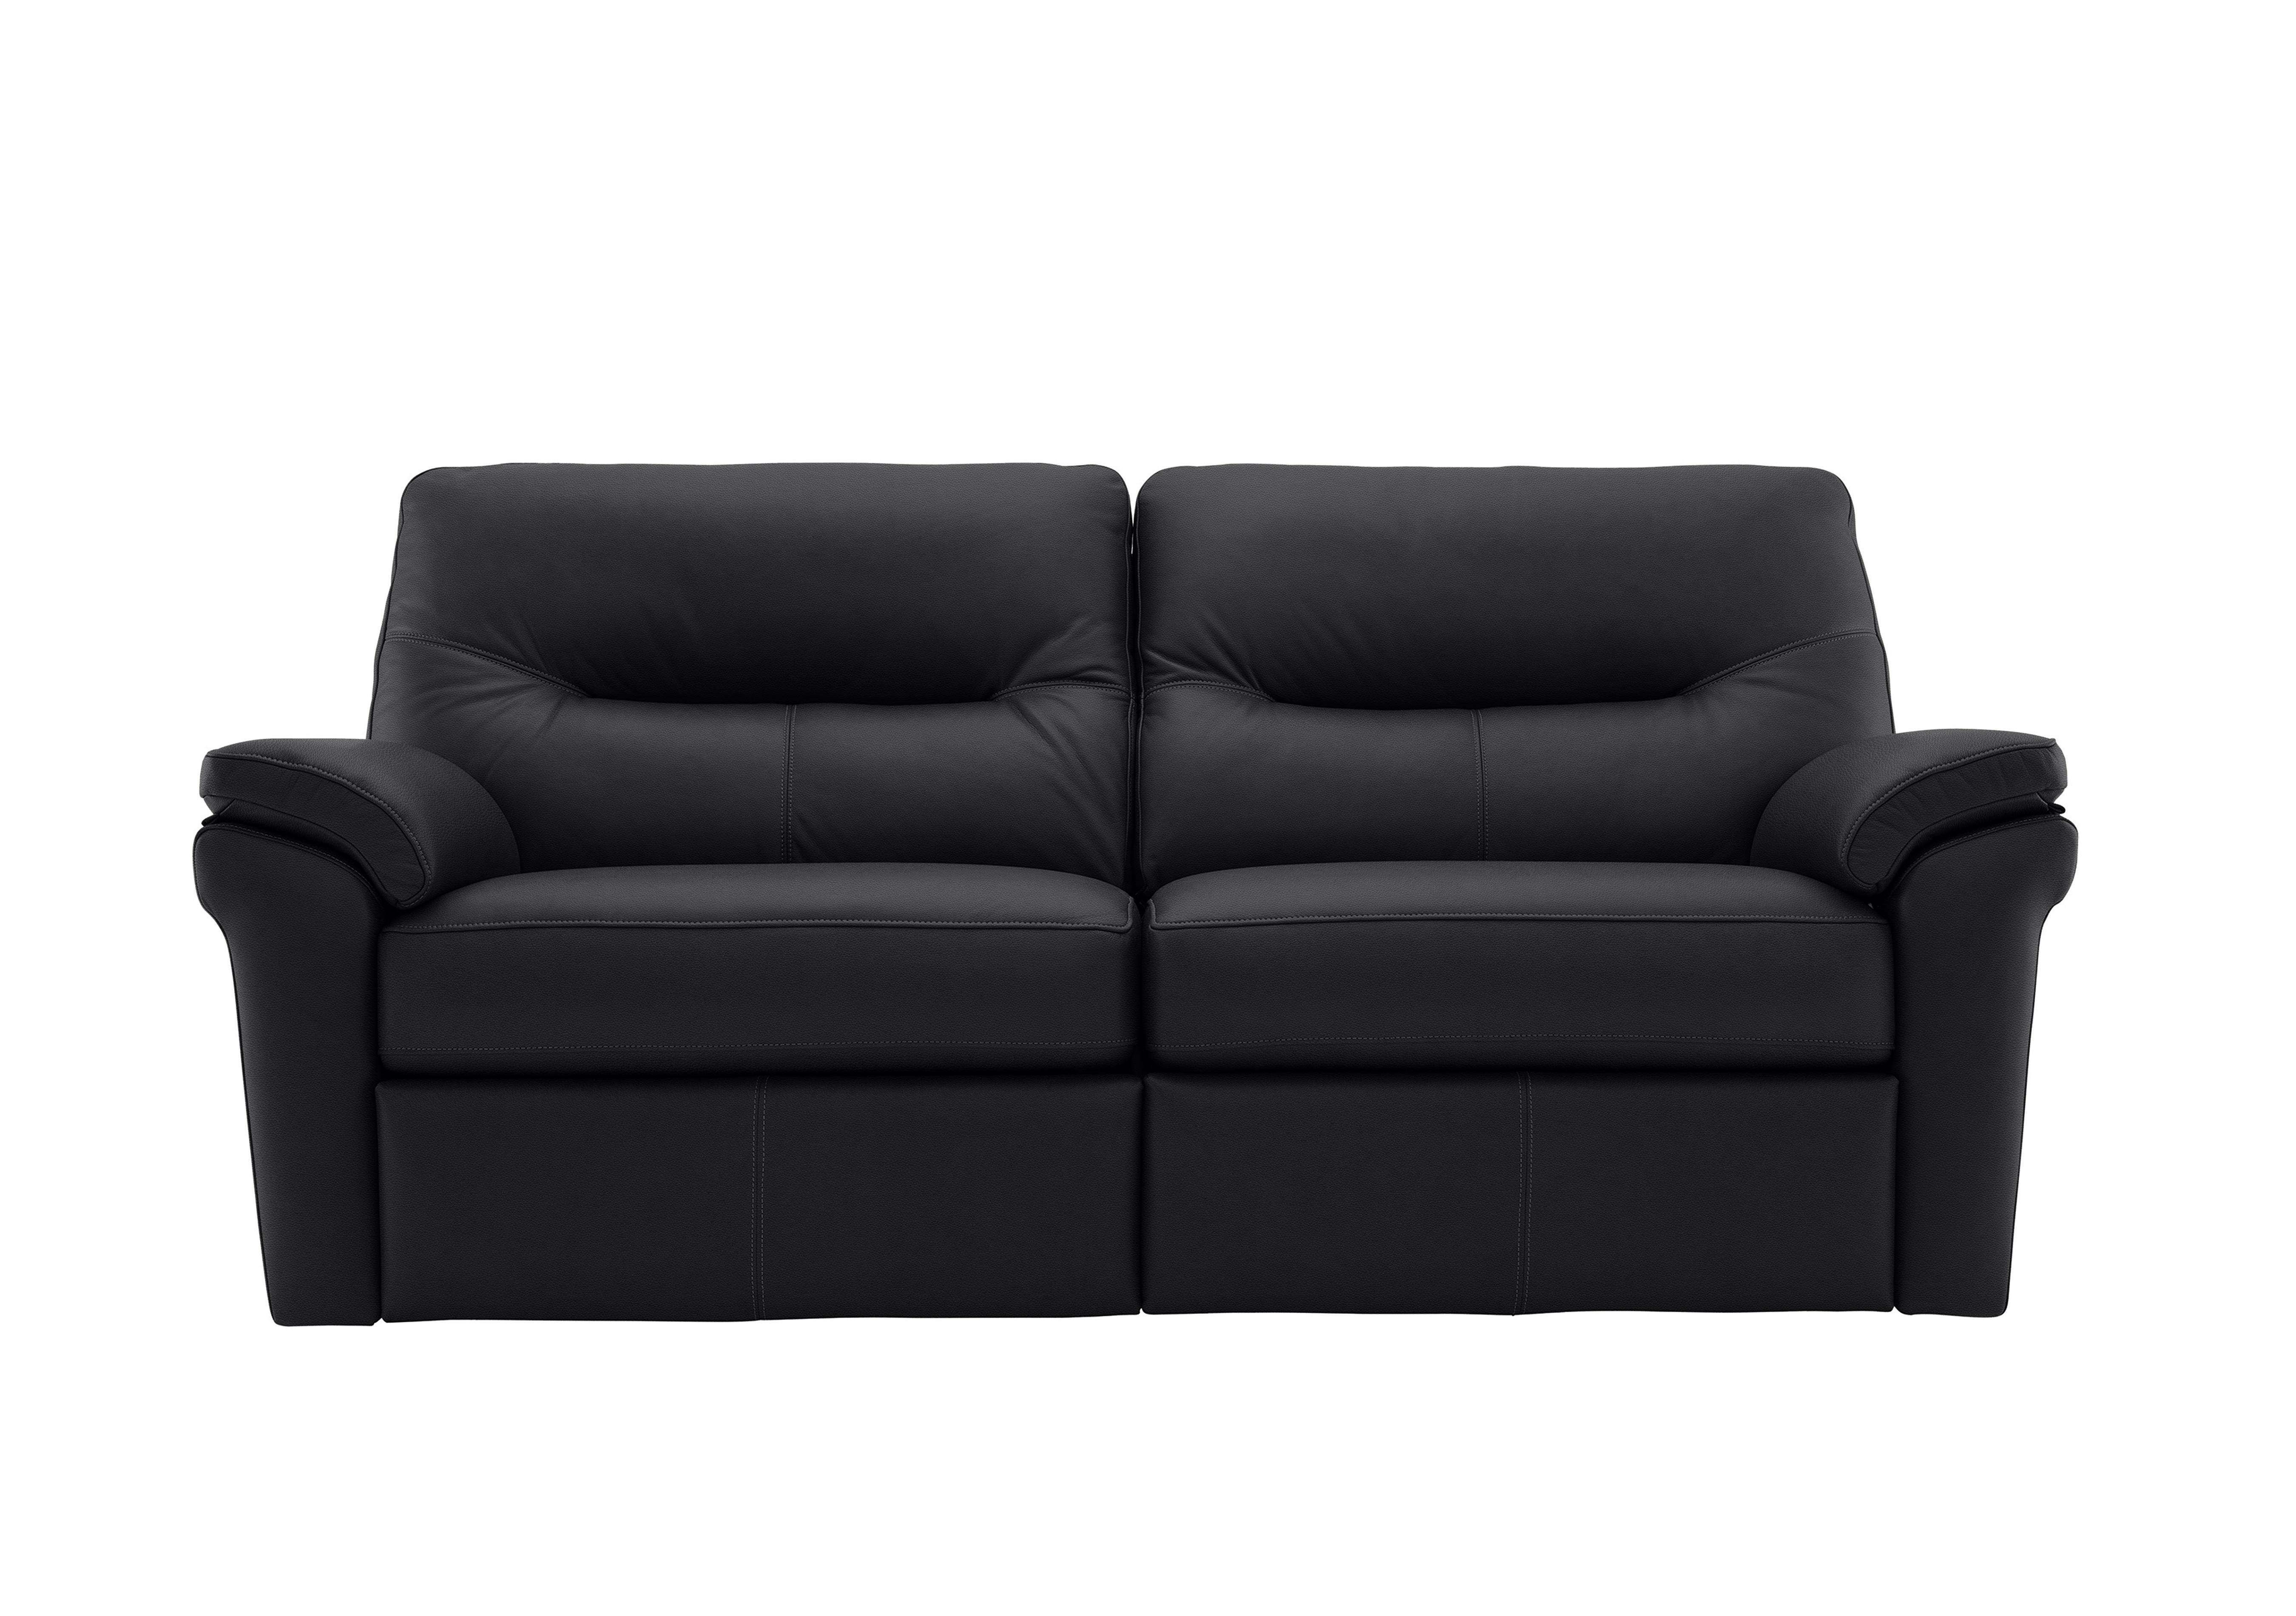 Seattle 3 Seater Leather Sofa in L854 Cambridge Black on Furniture Village